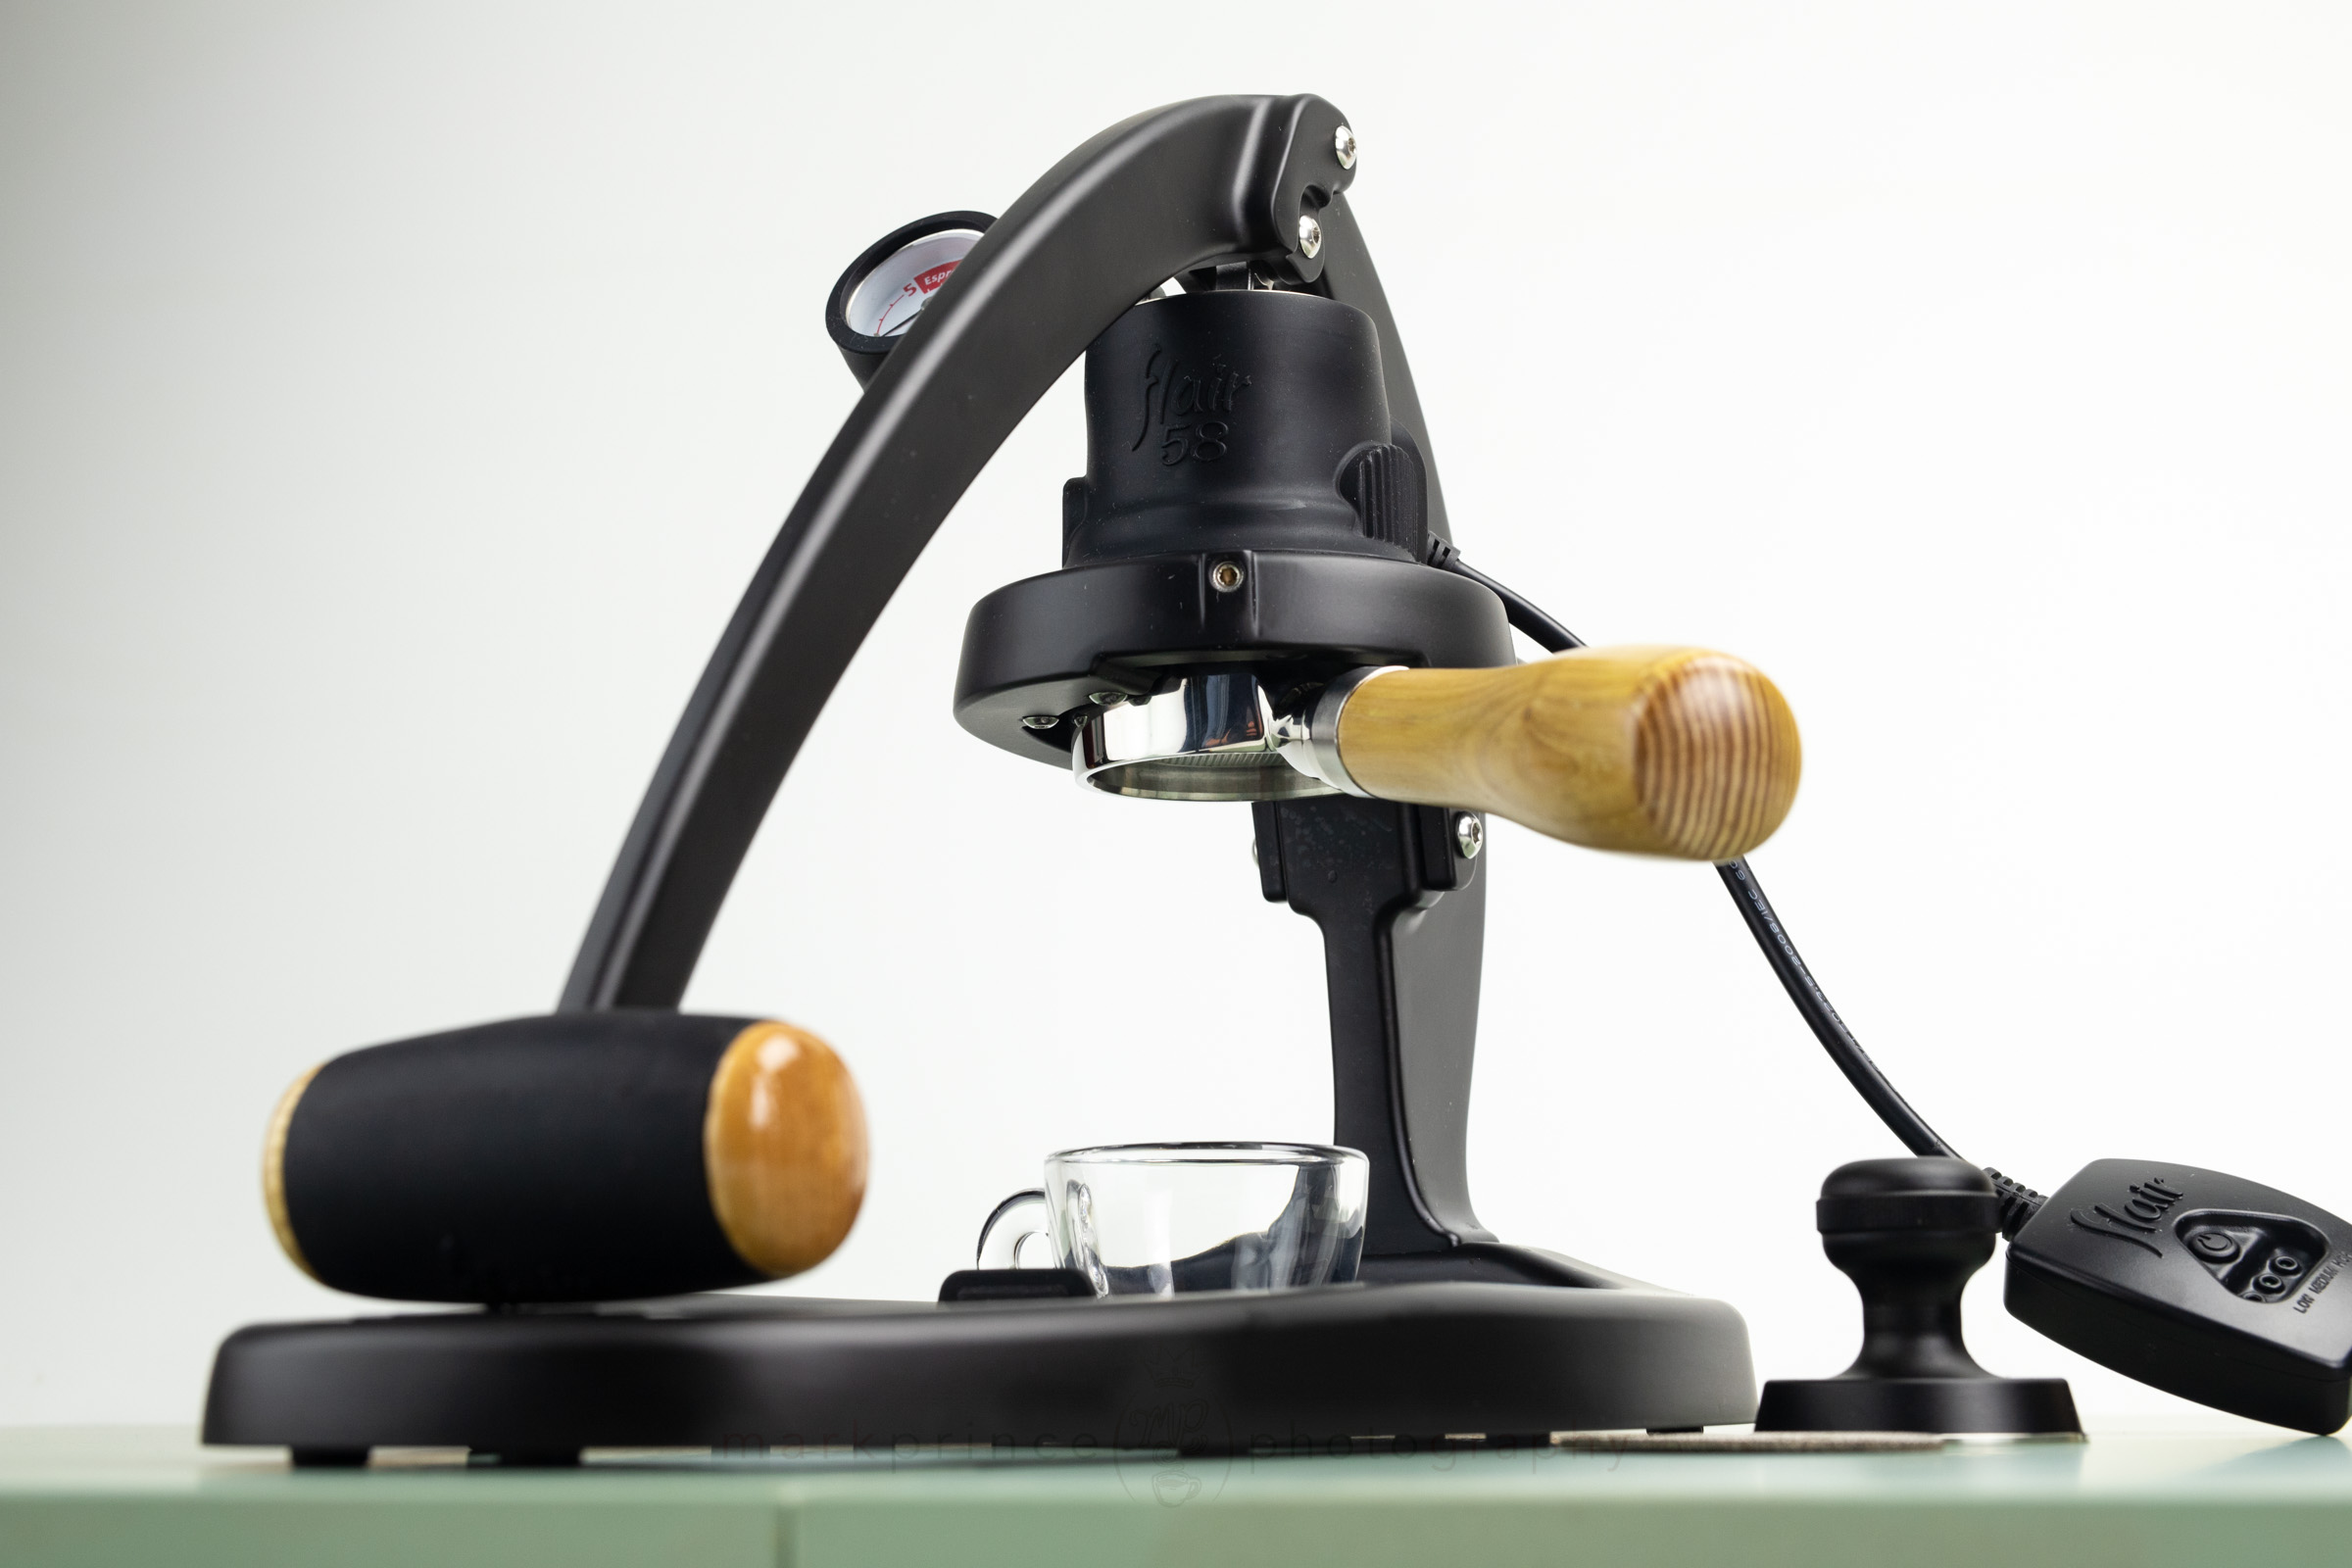 Flair 58: fully-manual lever press to democratize espresso